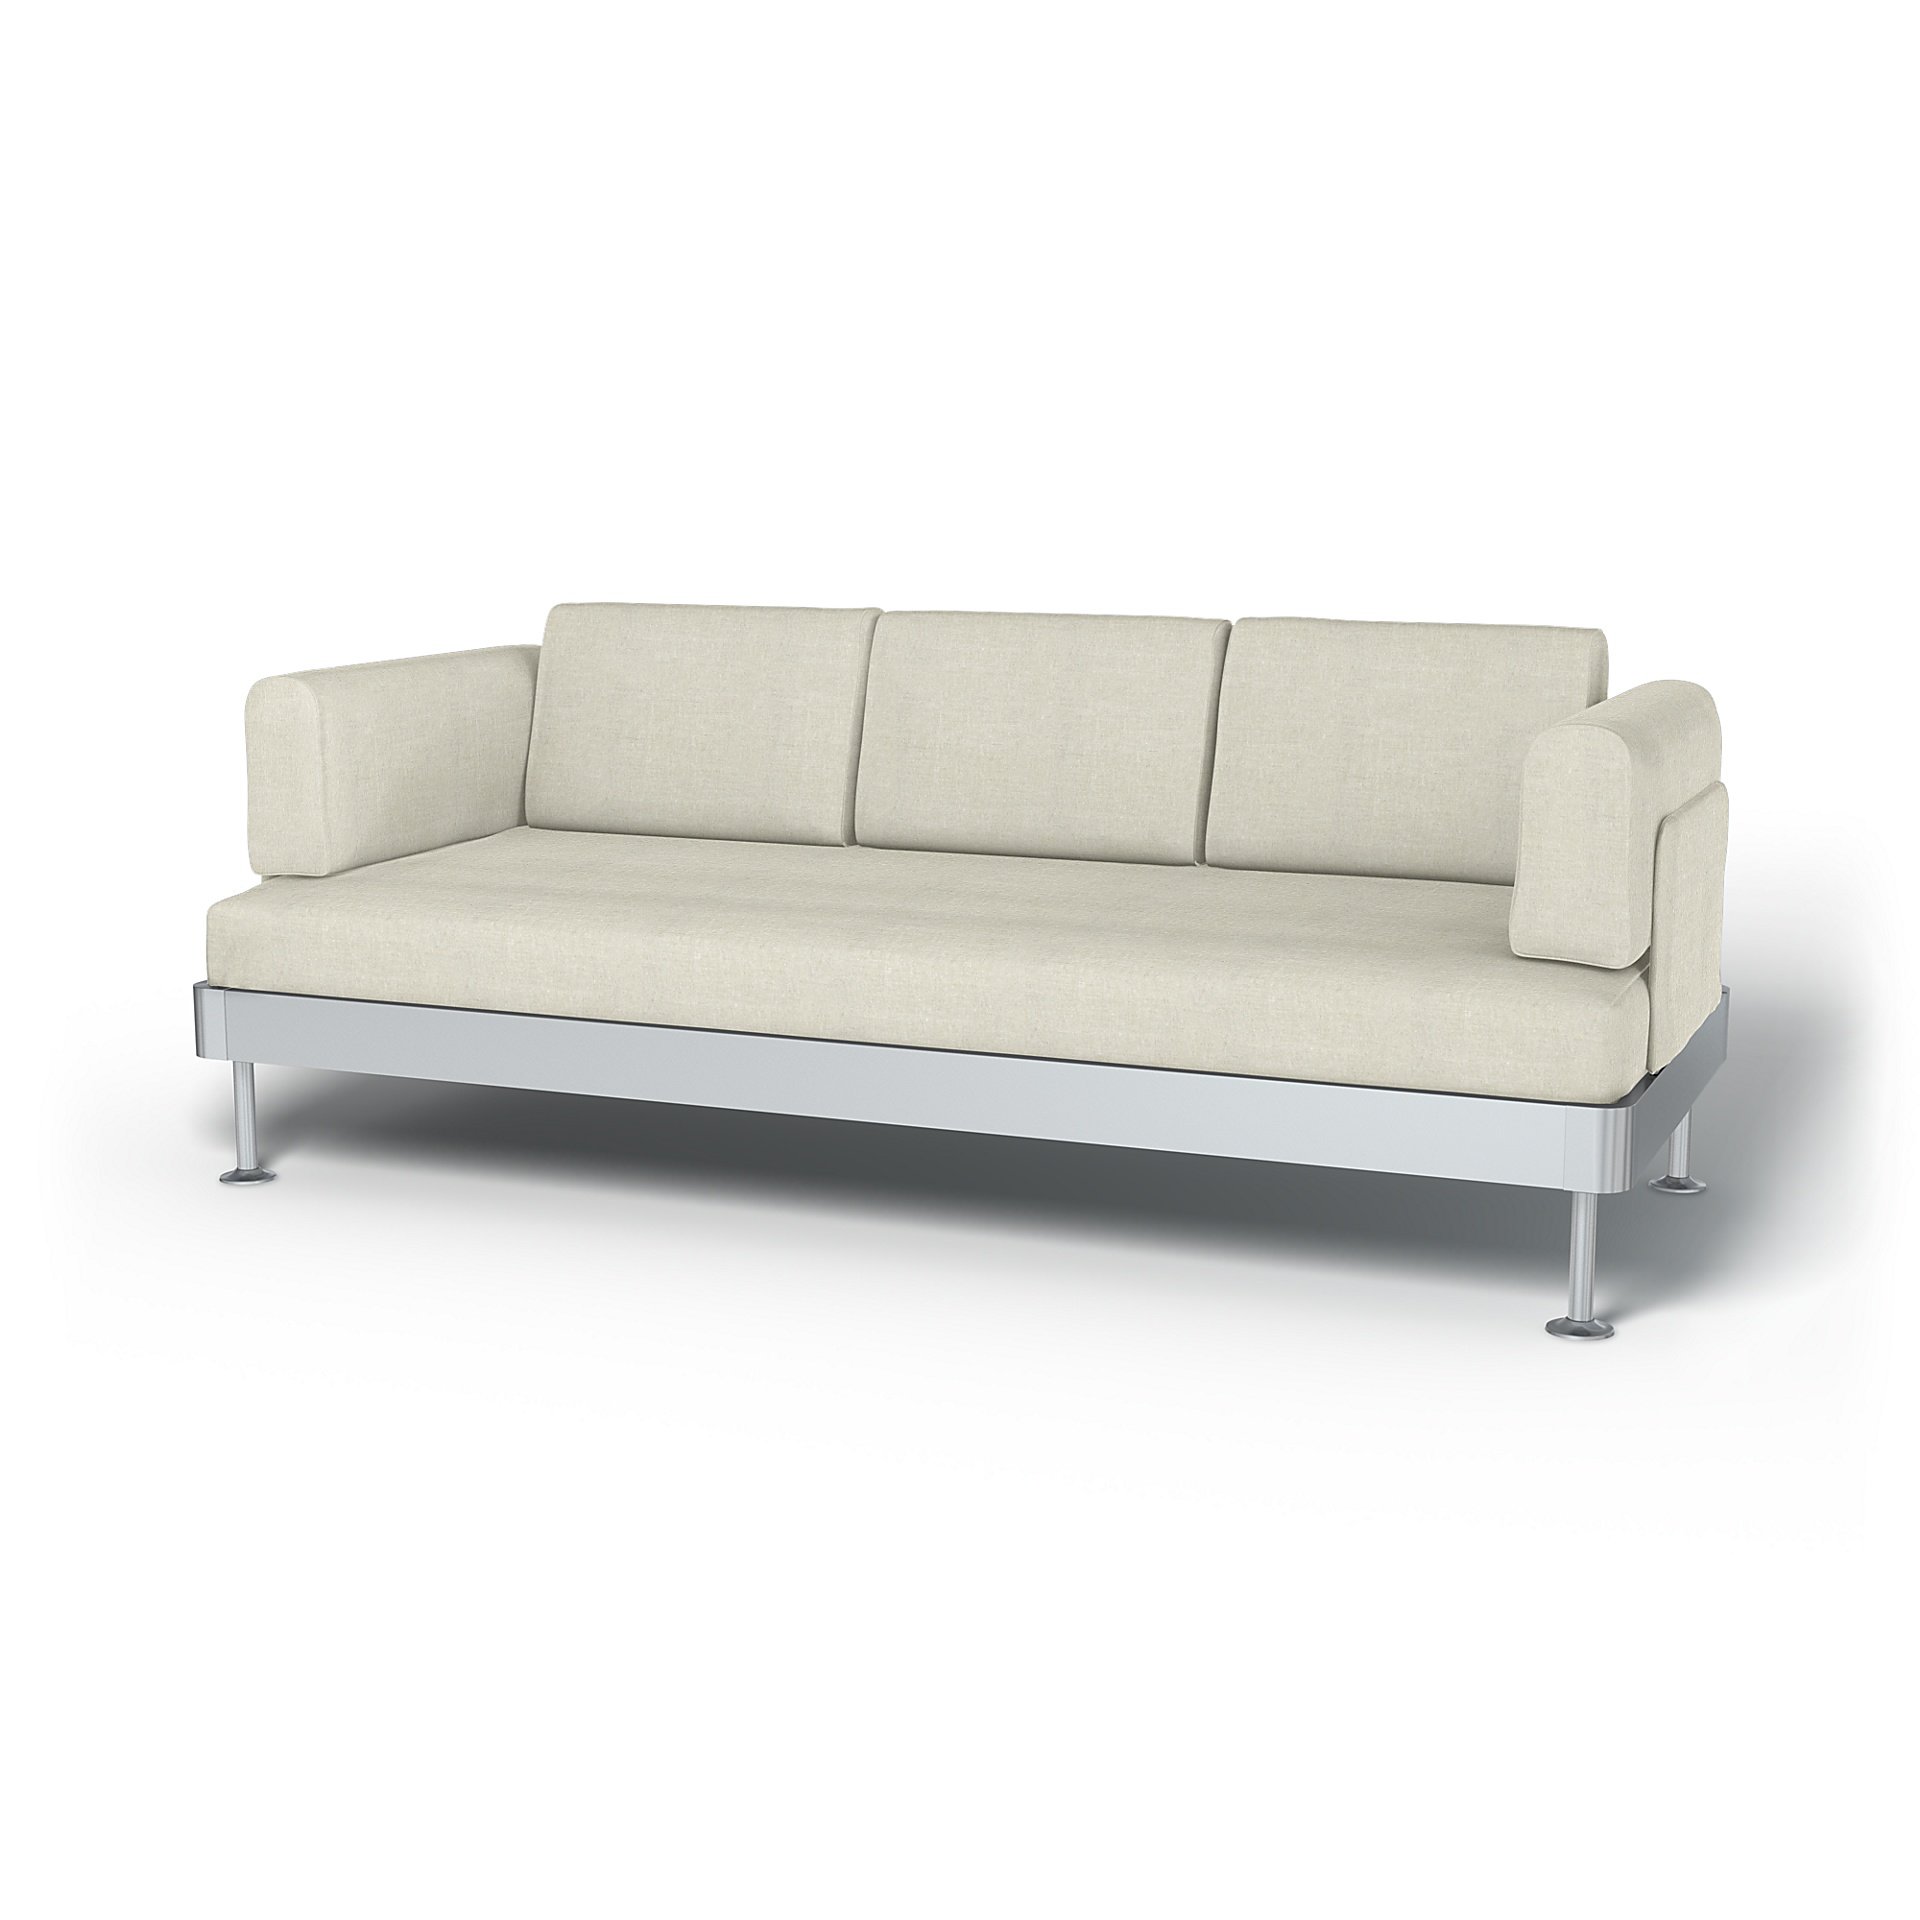 IKEA - Delaktig 3 Seater Sofa Cover, Natural, Linen - Bemz